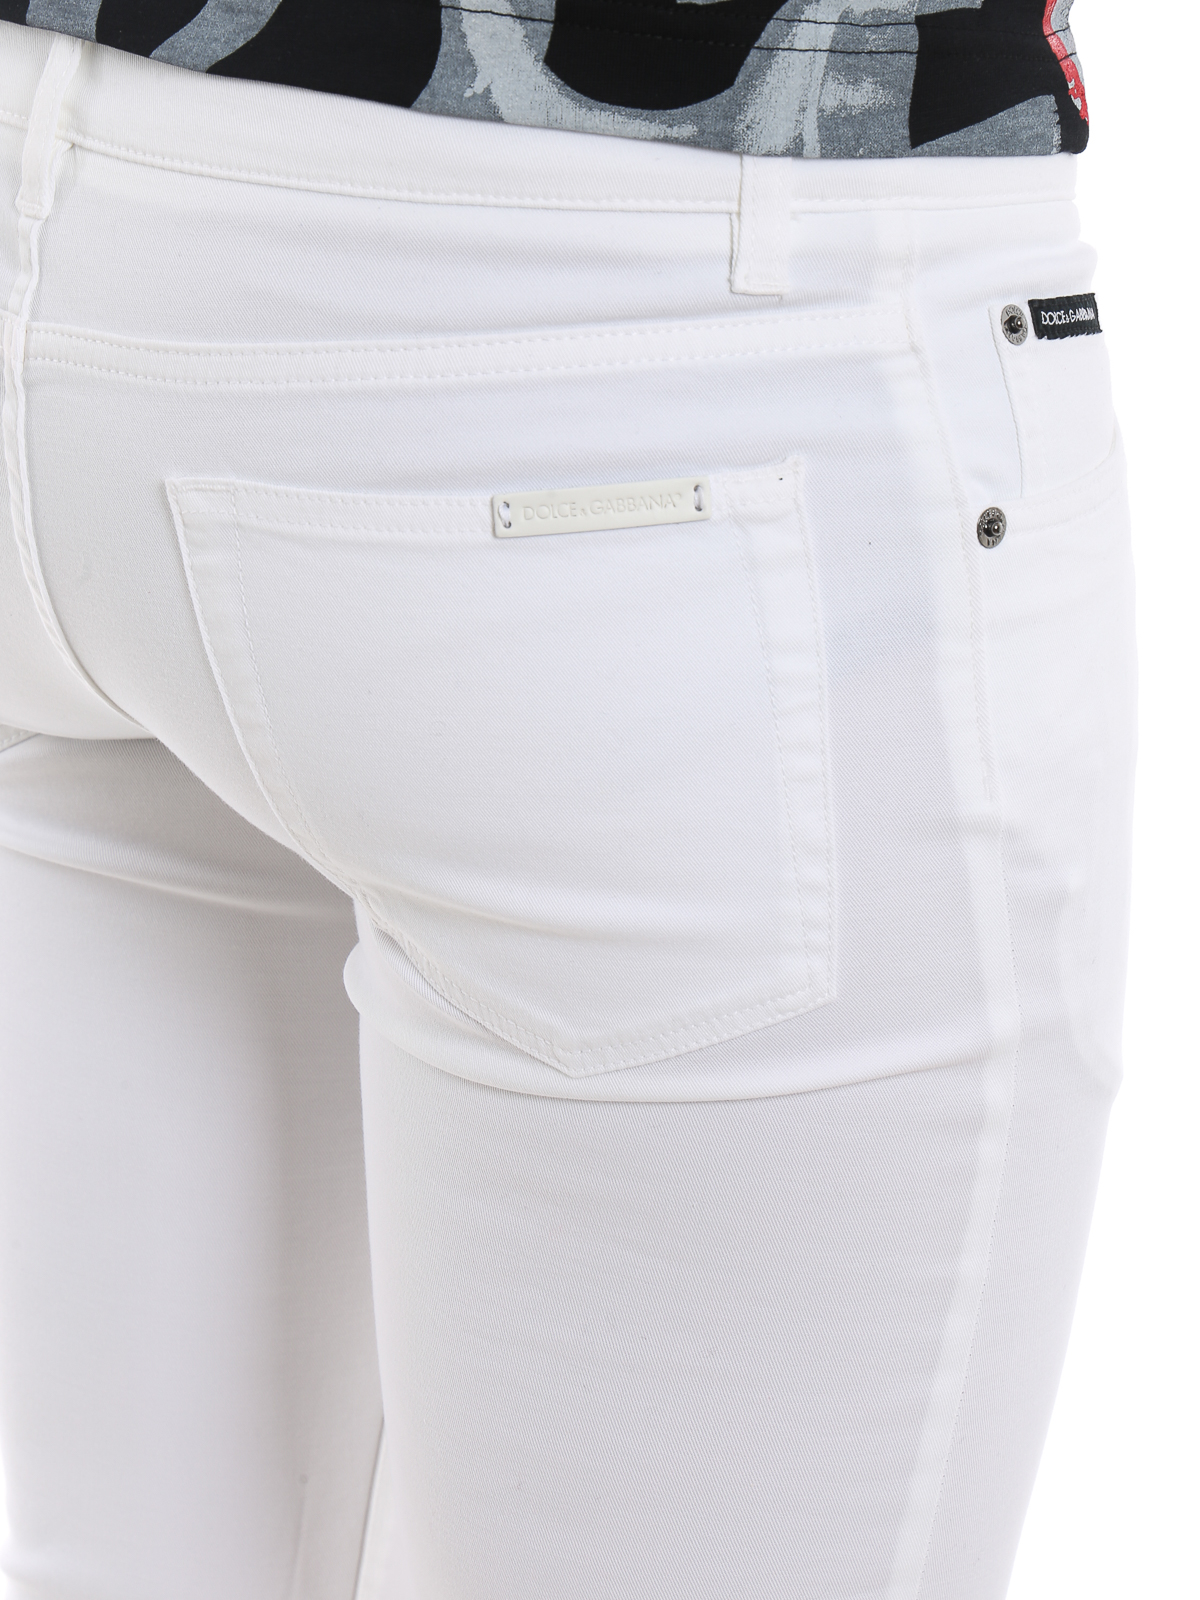 white tight jeans